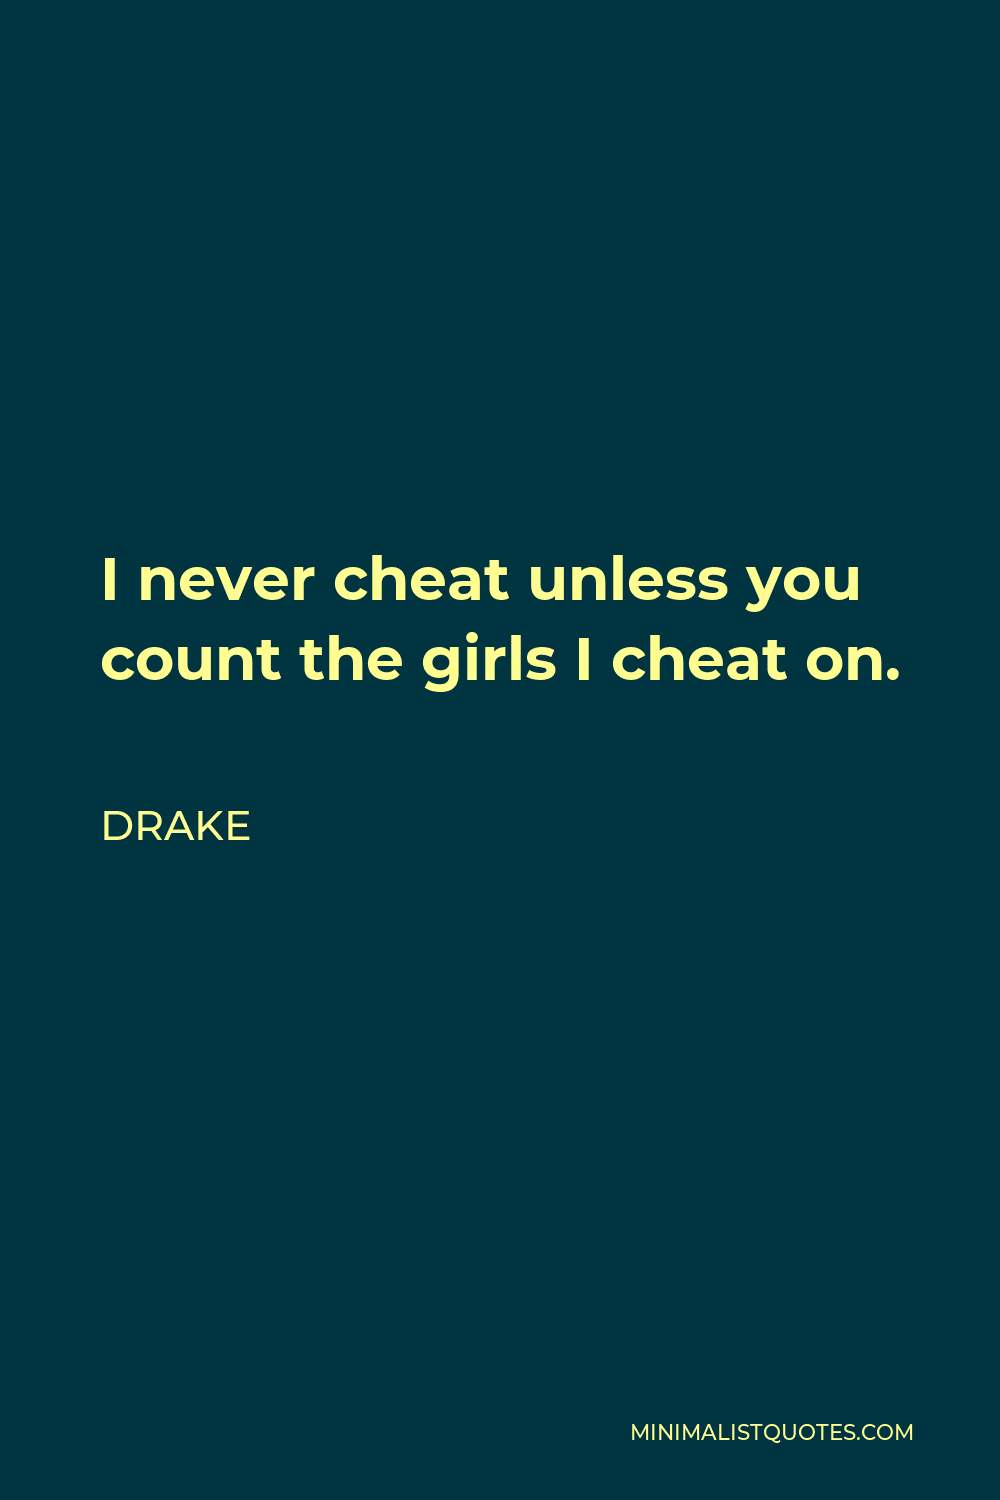 cheating quotes drake